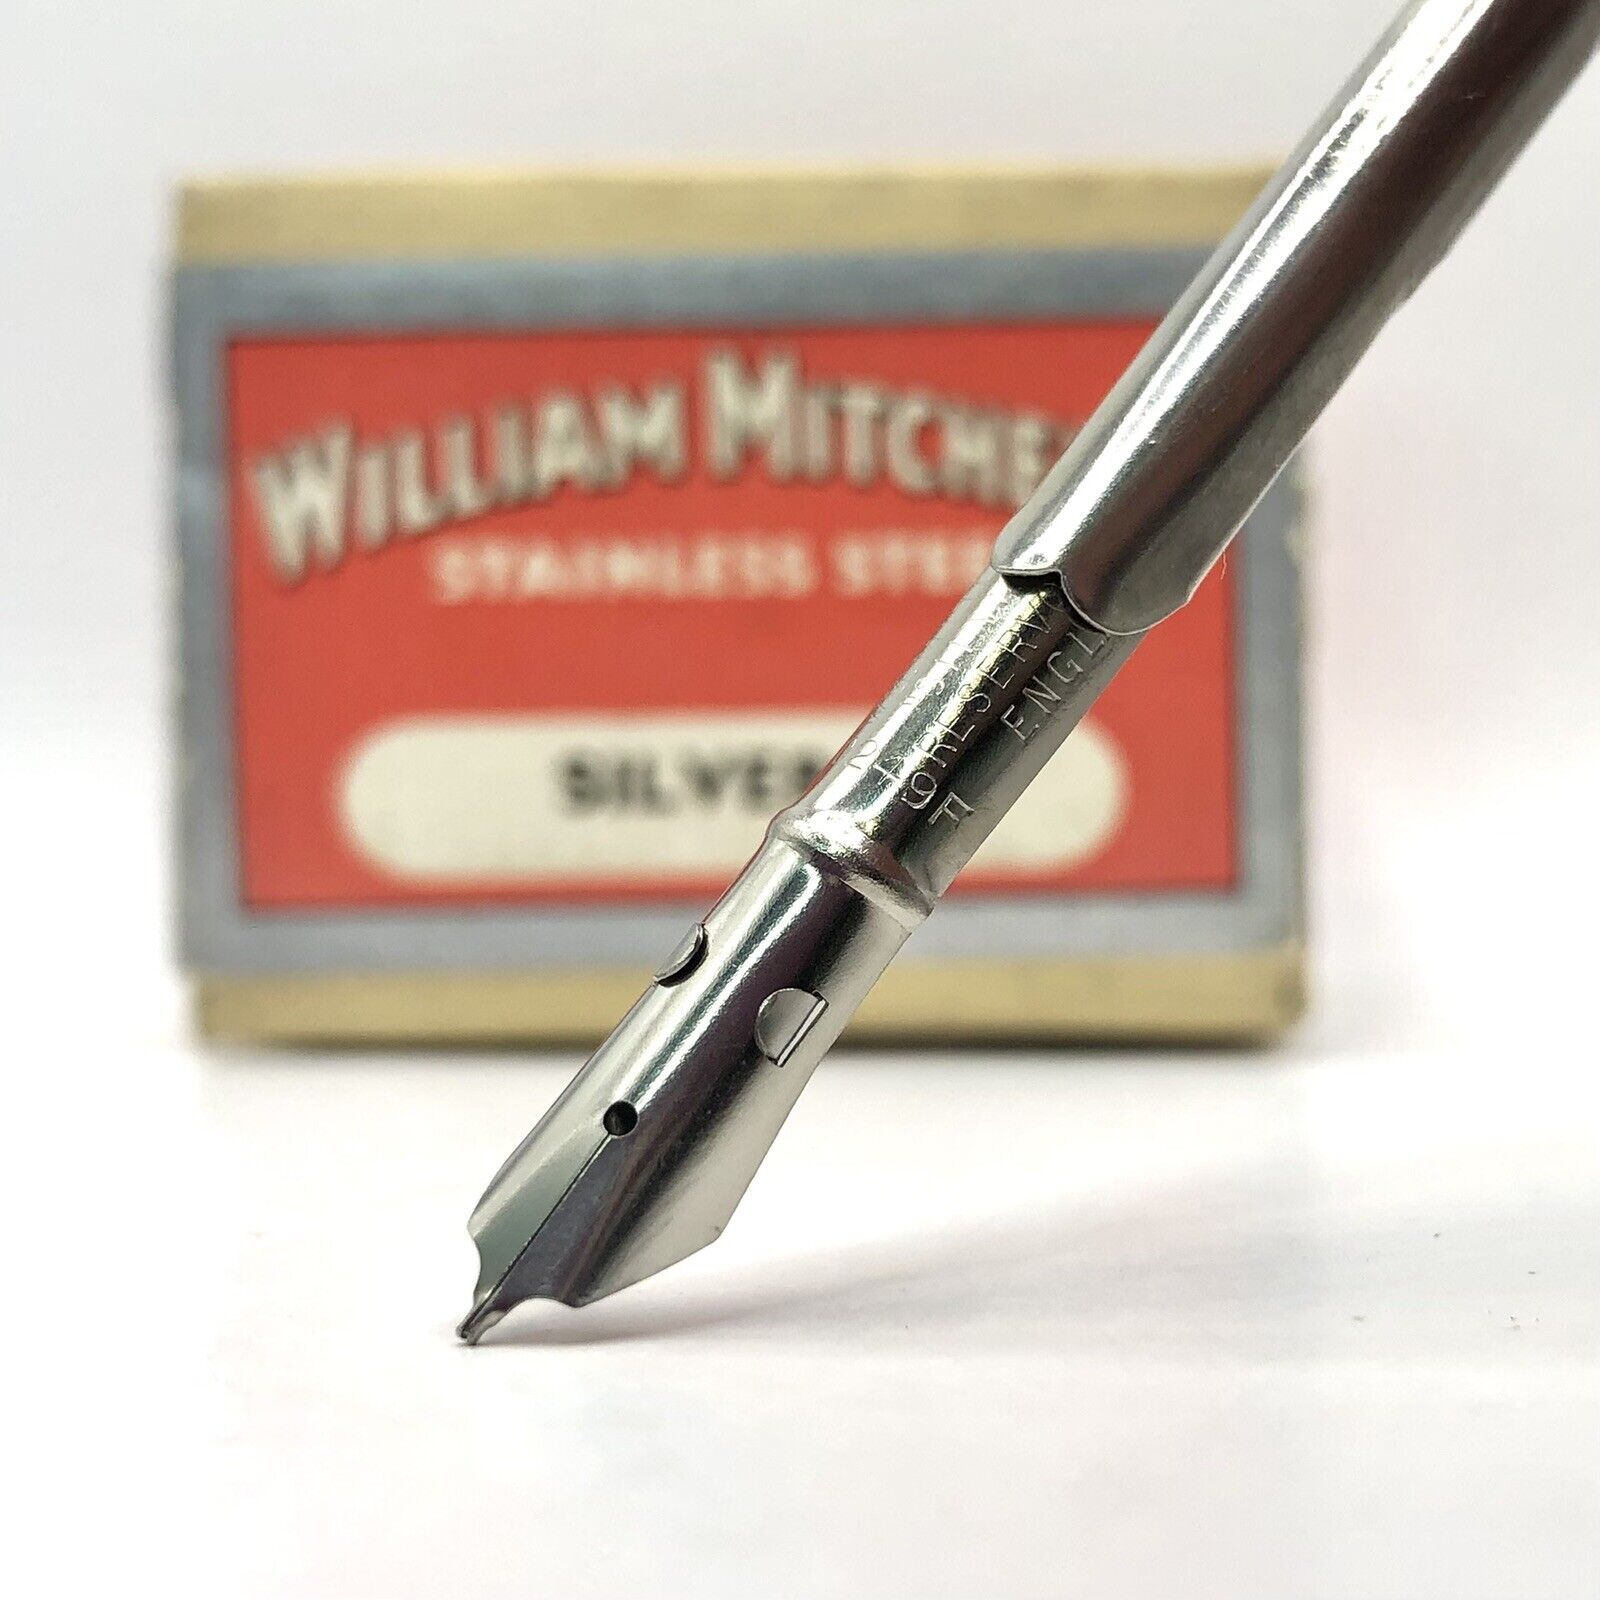 x2 William Mitchell's Silveroid Reservoir 0249 F Pen Nibs NEW Vintage Dip Pen William Mitchell